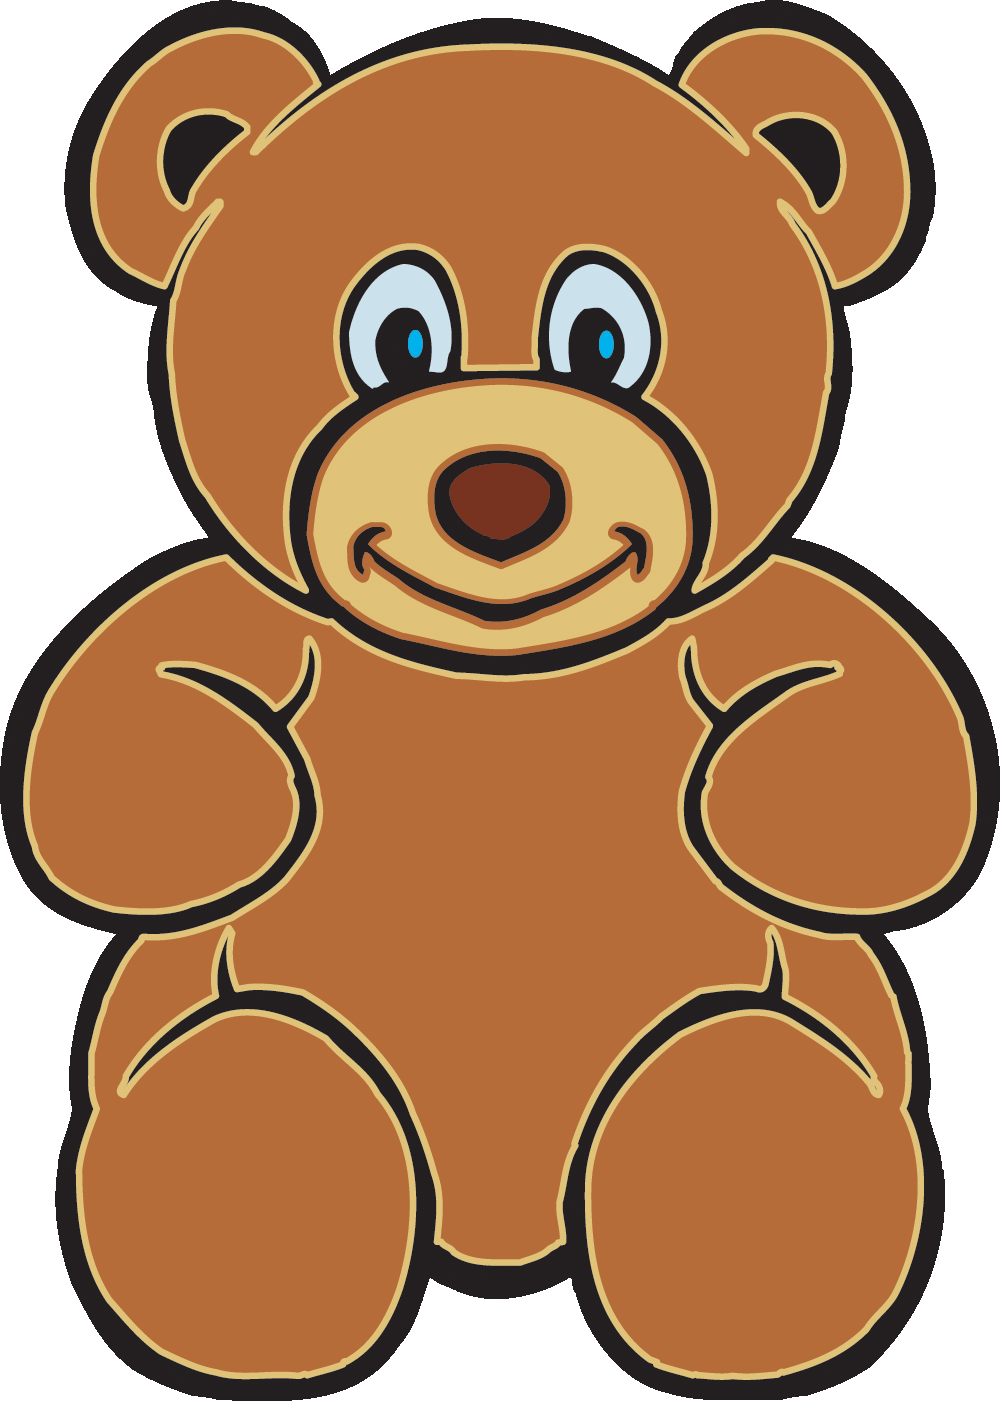 Teddy bear clipart free clipart images 2 clipartwiz clipartix